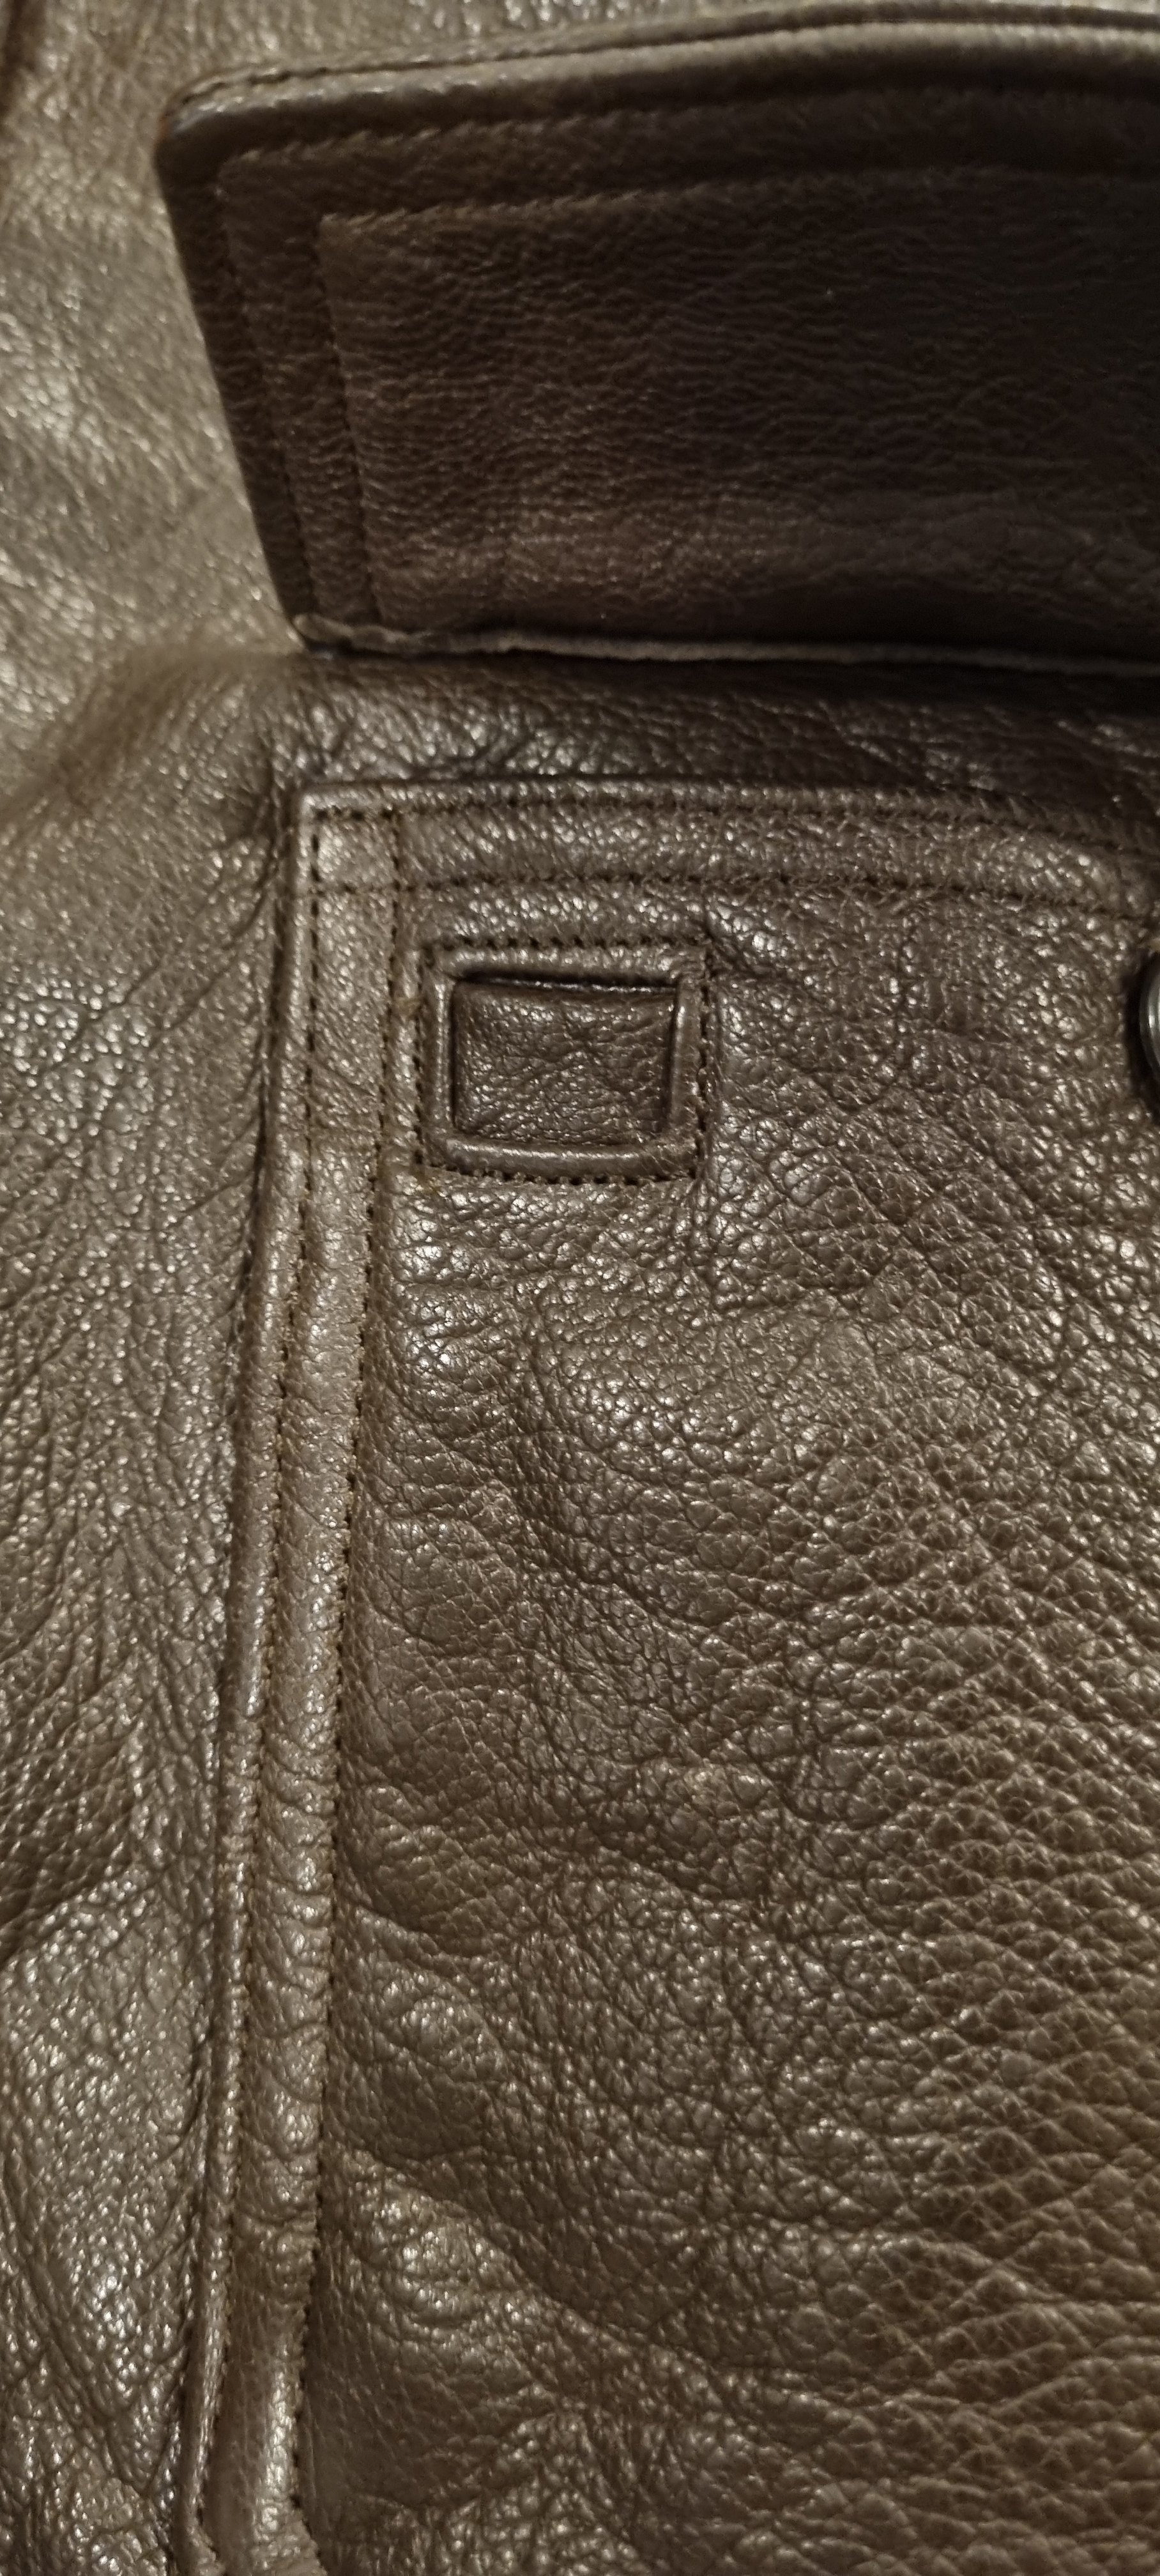 G1? Jacket identification | Vintage Leather Jackets Forum